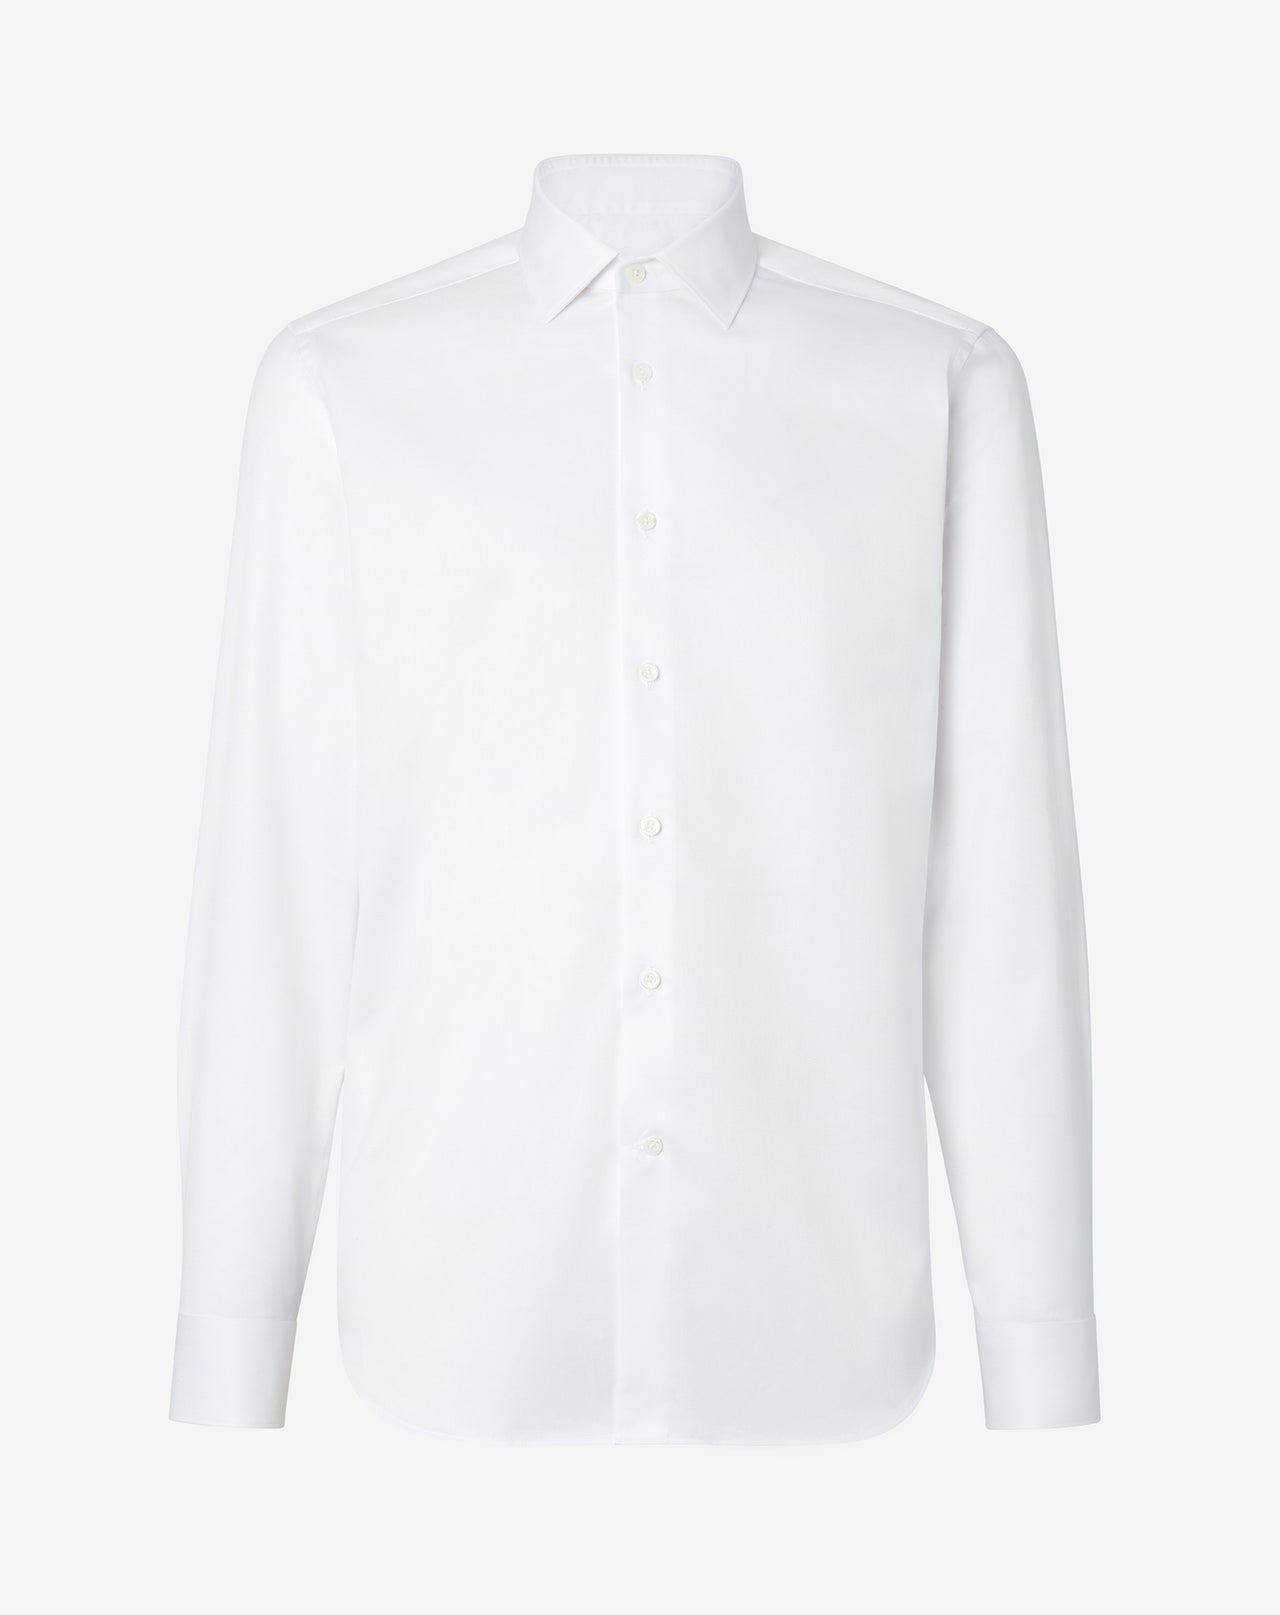 CORNELIANI Cotton Fine Twill Shirt WHITE